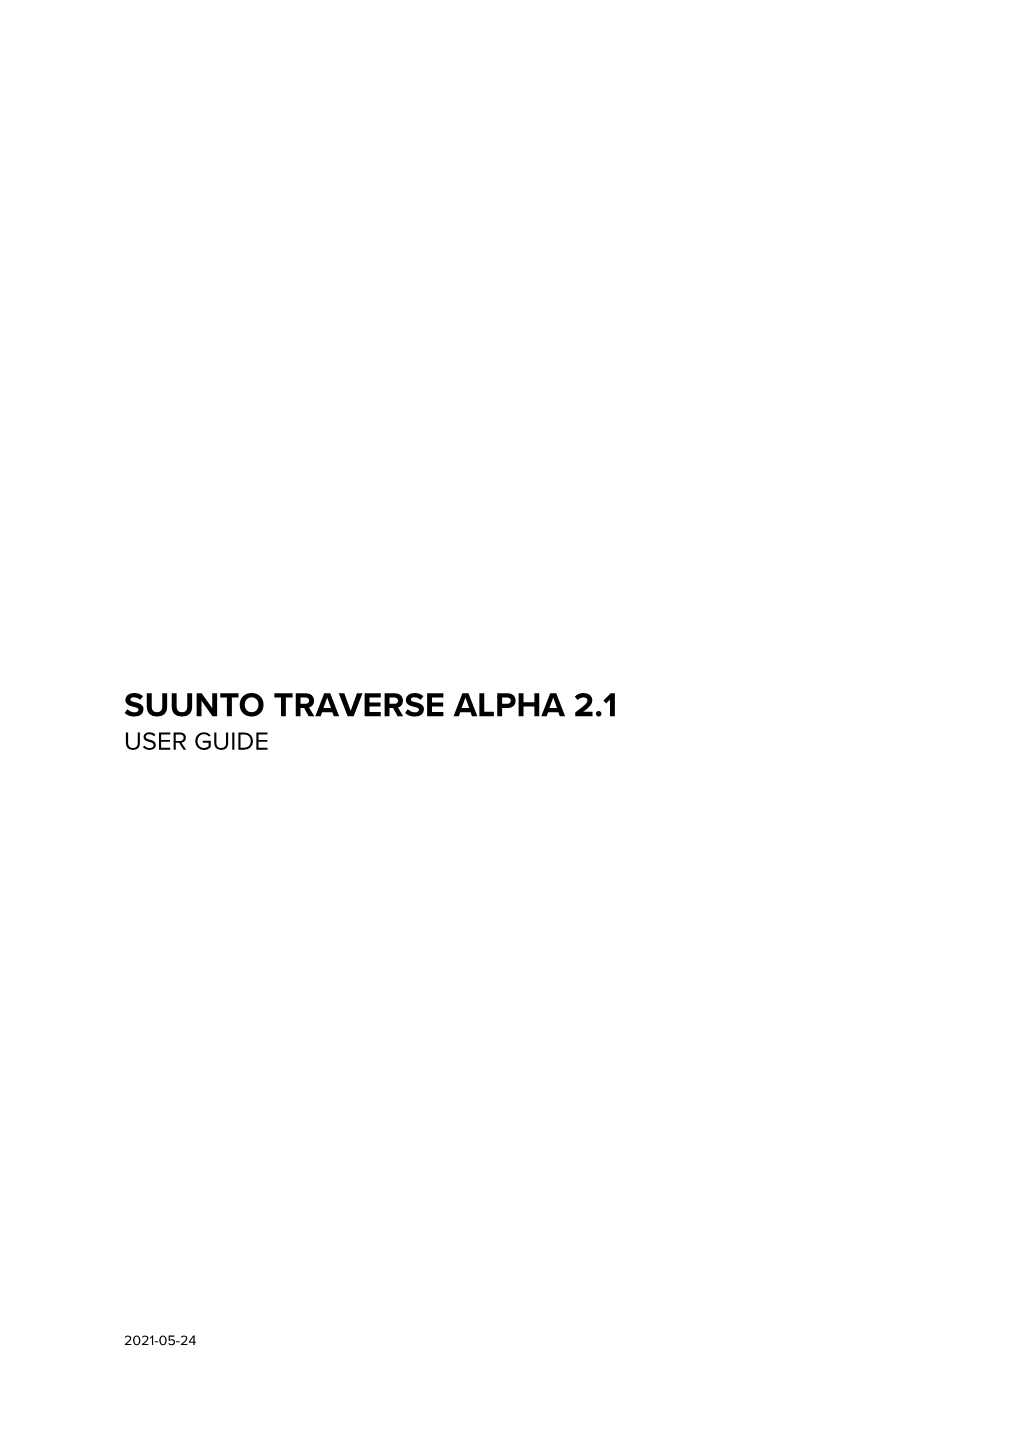 Suunto Traverse Alpha 2.1 User Guide